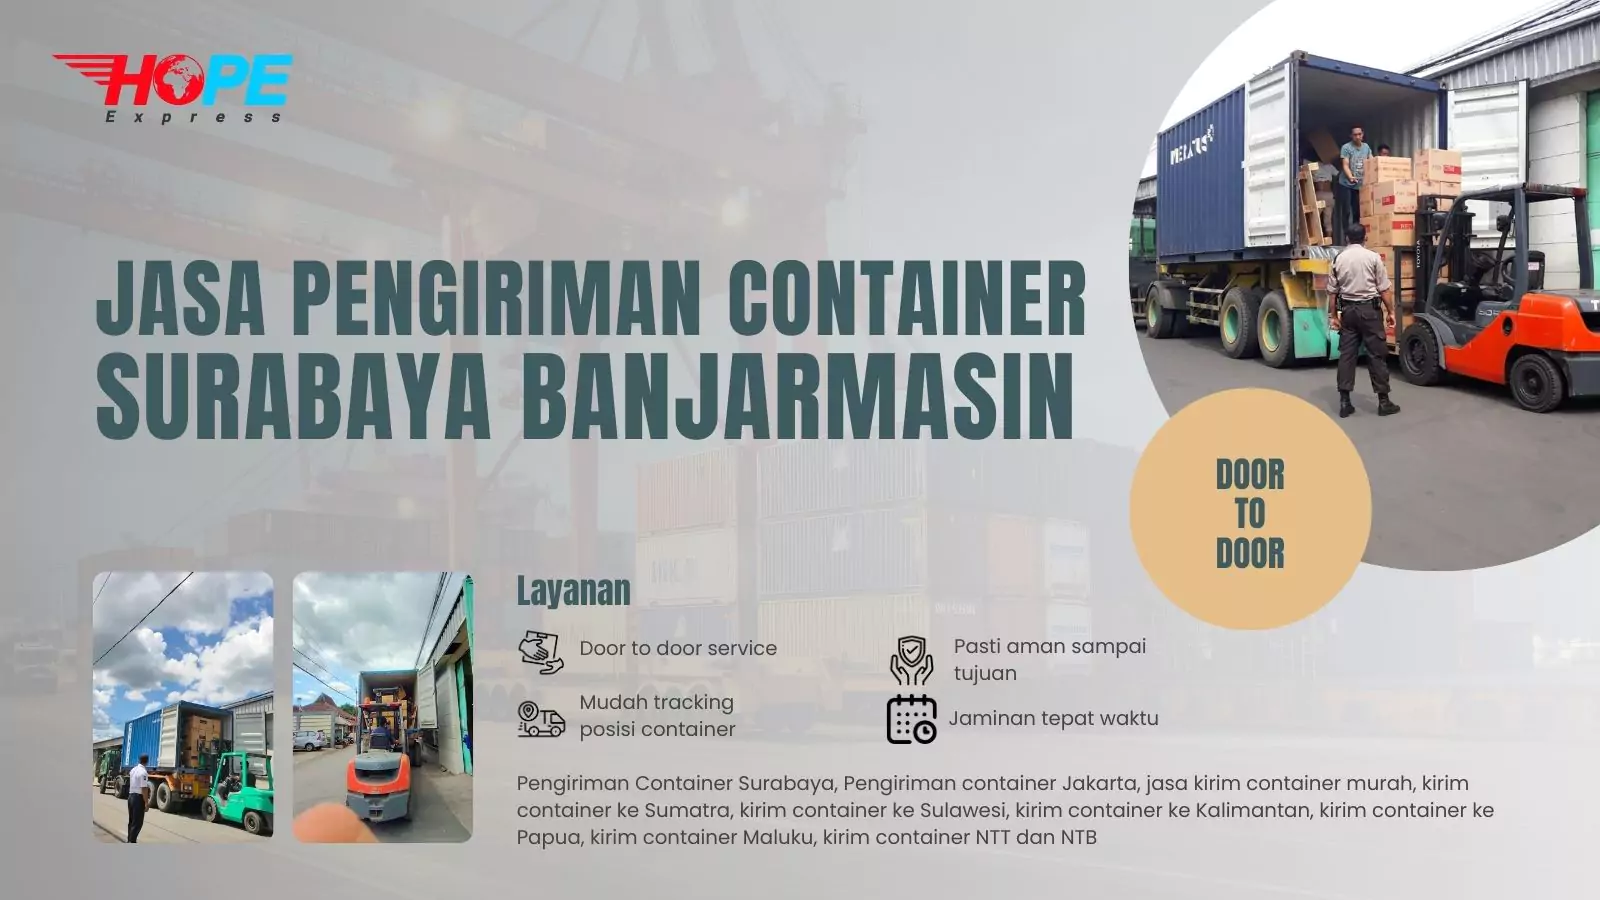 Jasa Pengiriman Container Surabaya Banjarmasin